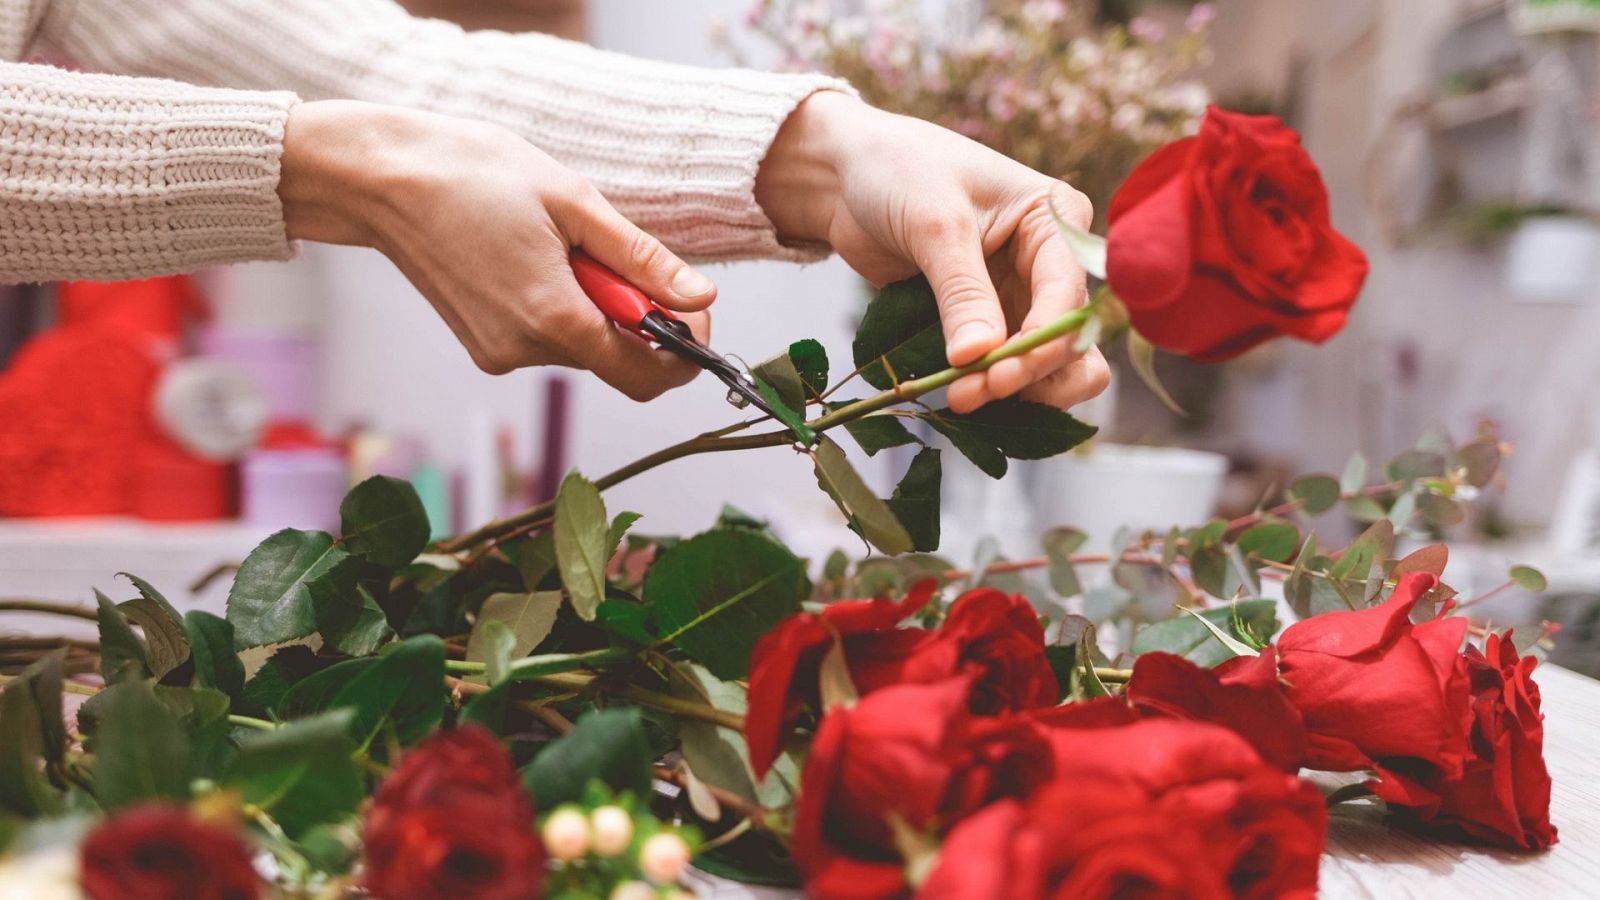 Sant Jordi: El Mercado de la Flor distribuye 4 millones de rosas